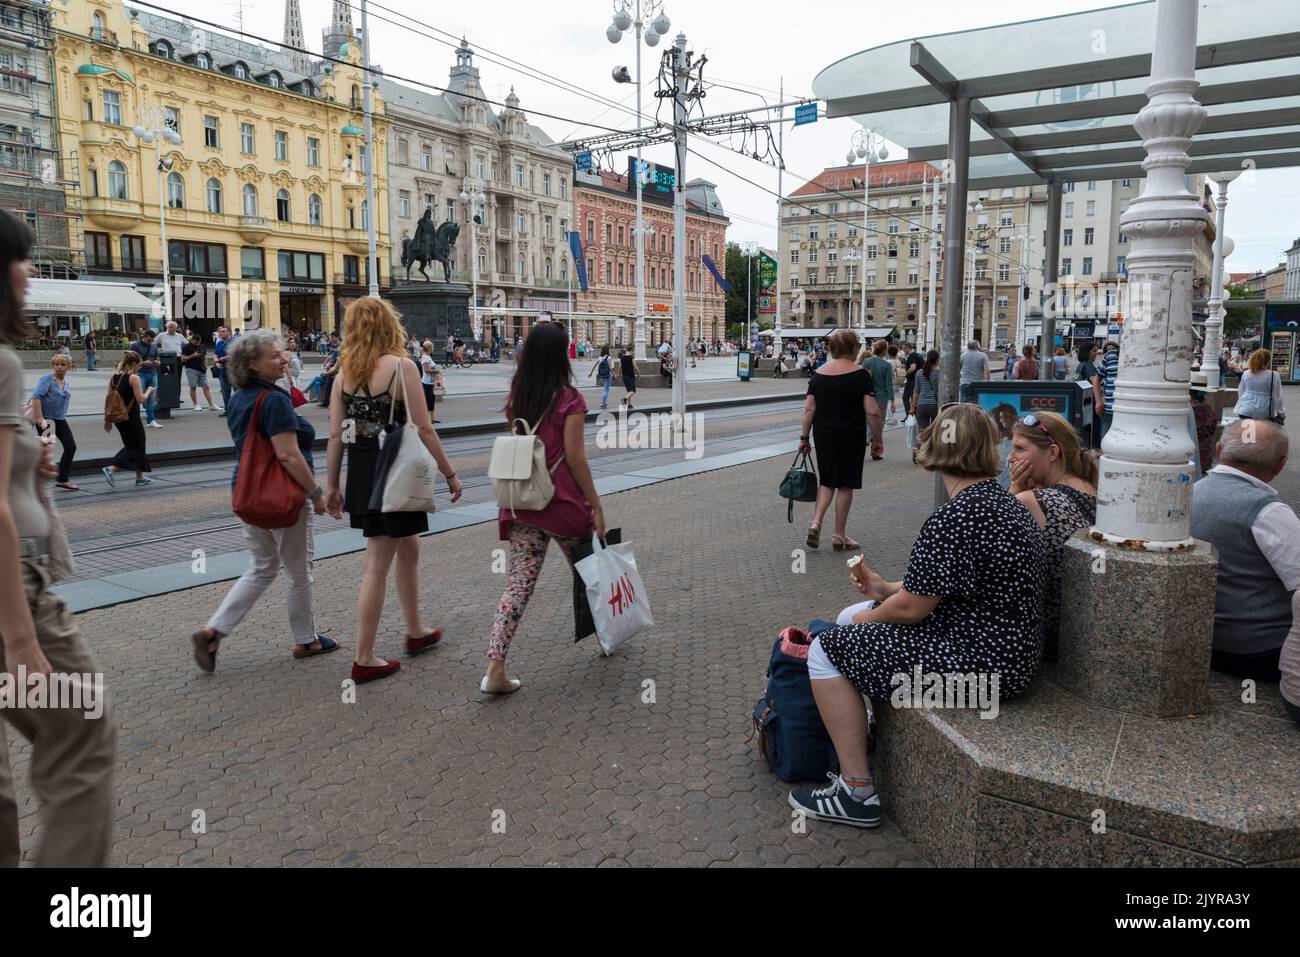 People walking in the Ban Jelacic Square in Zagreb, Croatia, Europe. Stock Photo